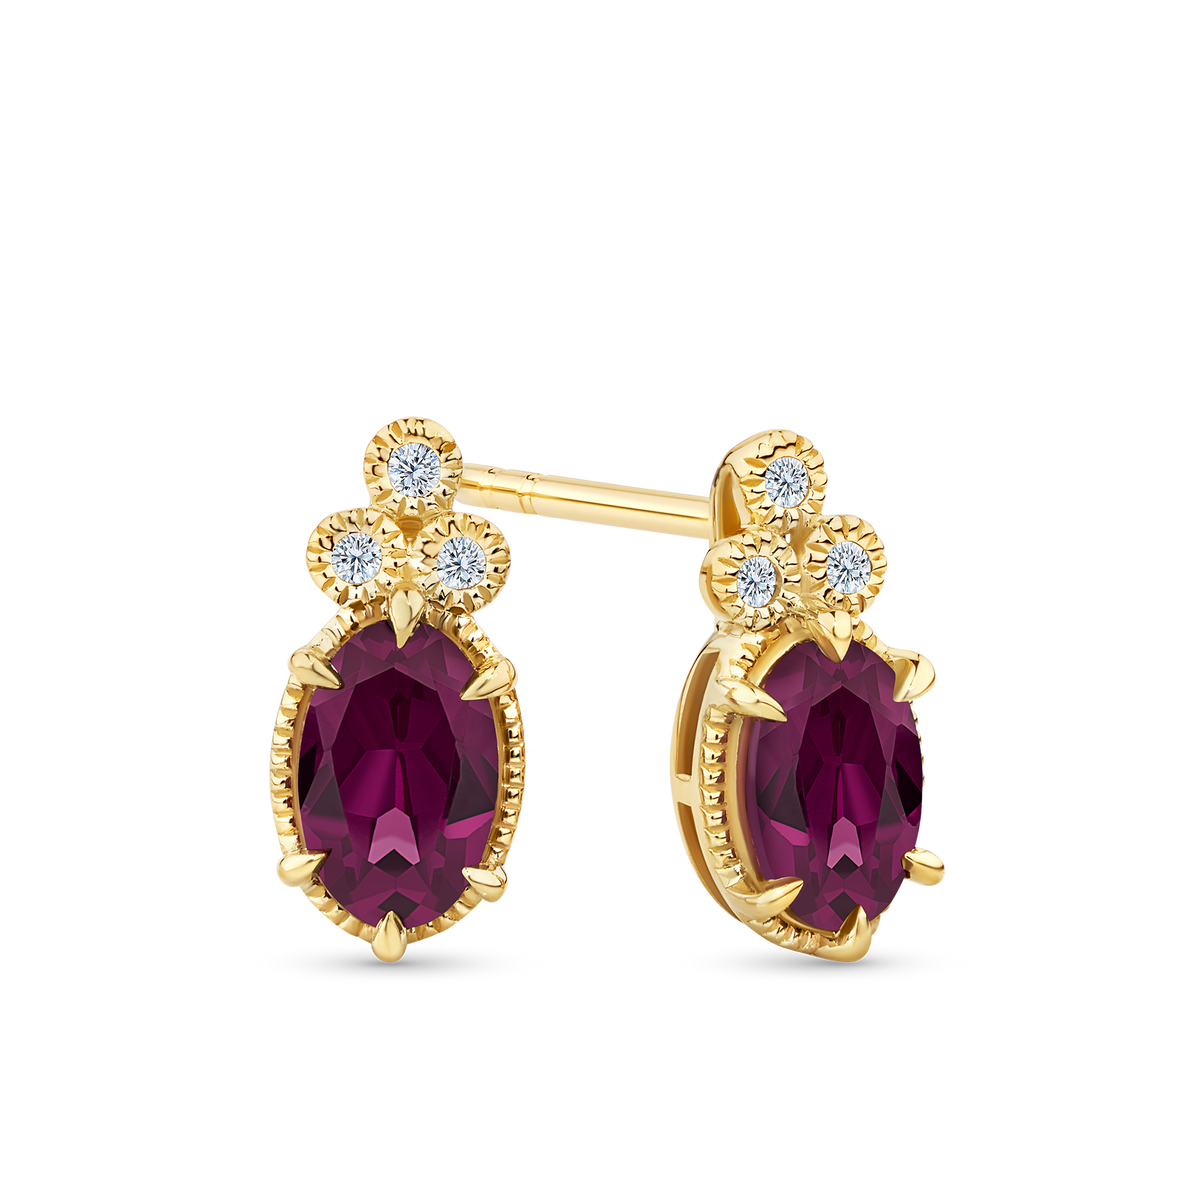 Rhodolite Garnet & 1.20ct TW Diamond Stud Earrings in 9ct Yellow Gold